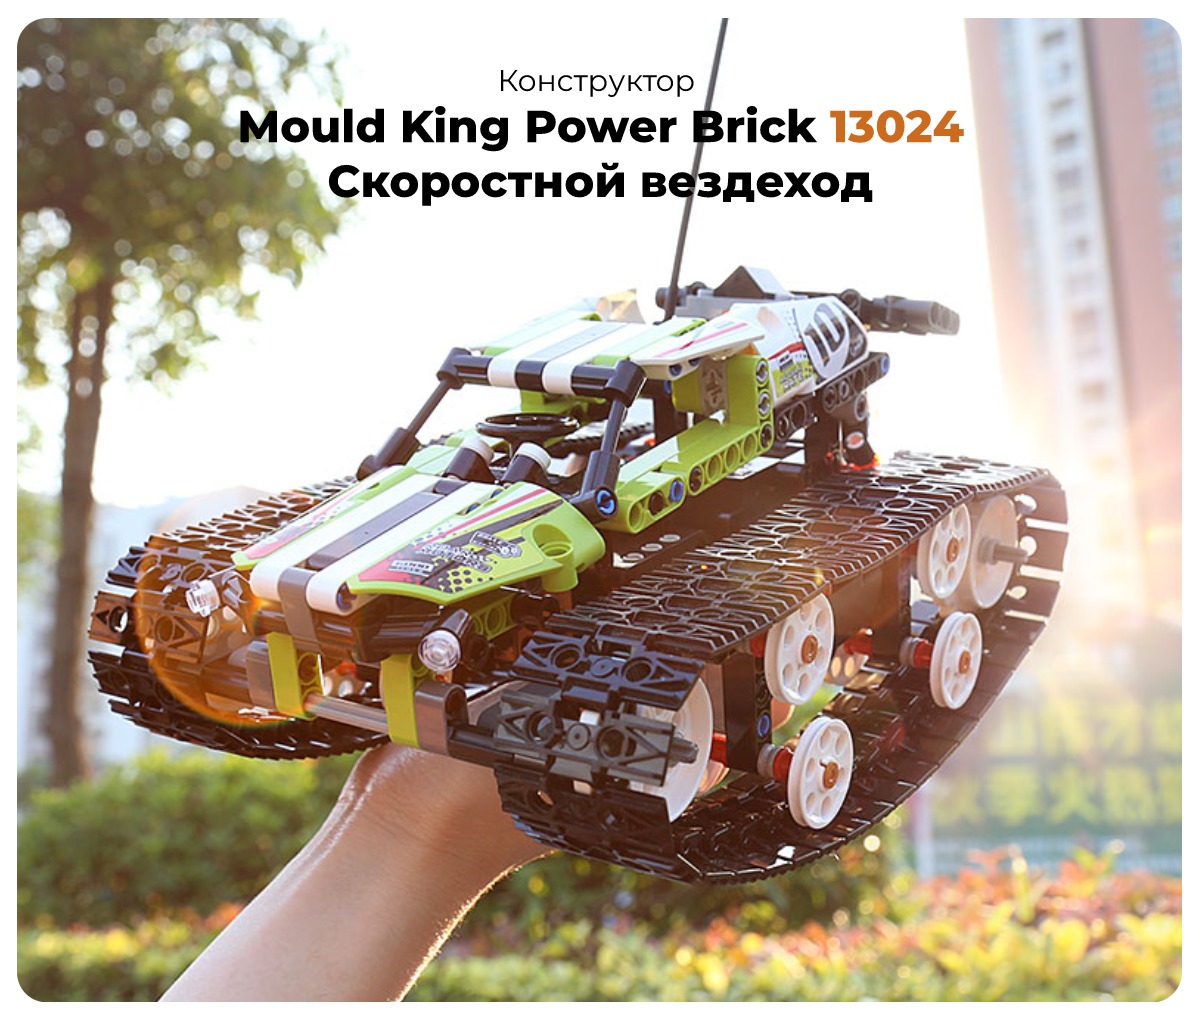 Mould-King-Power-Brick-13024-01